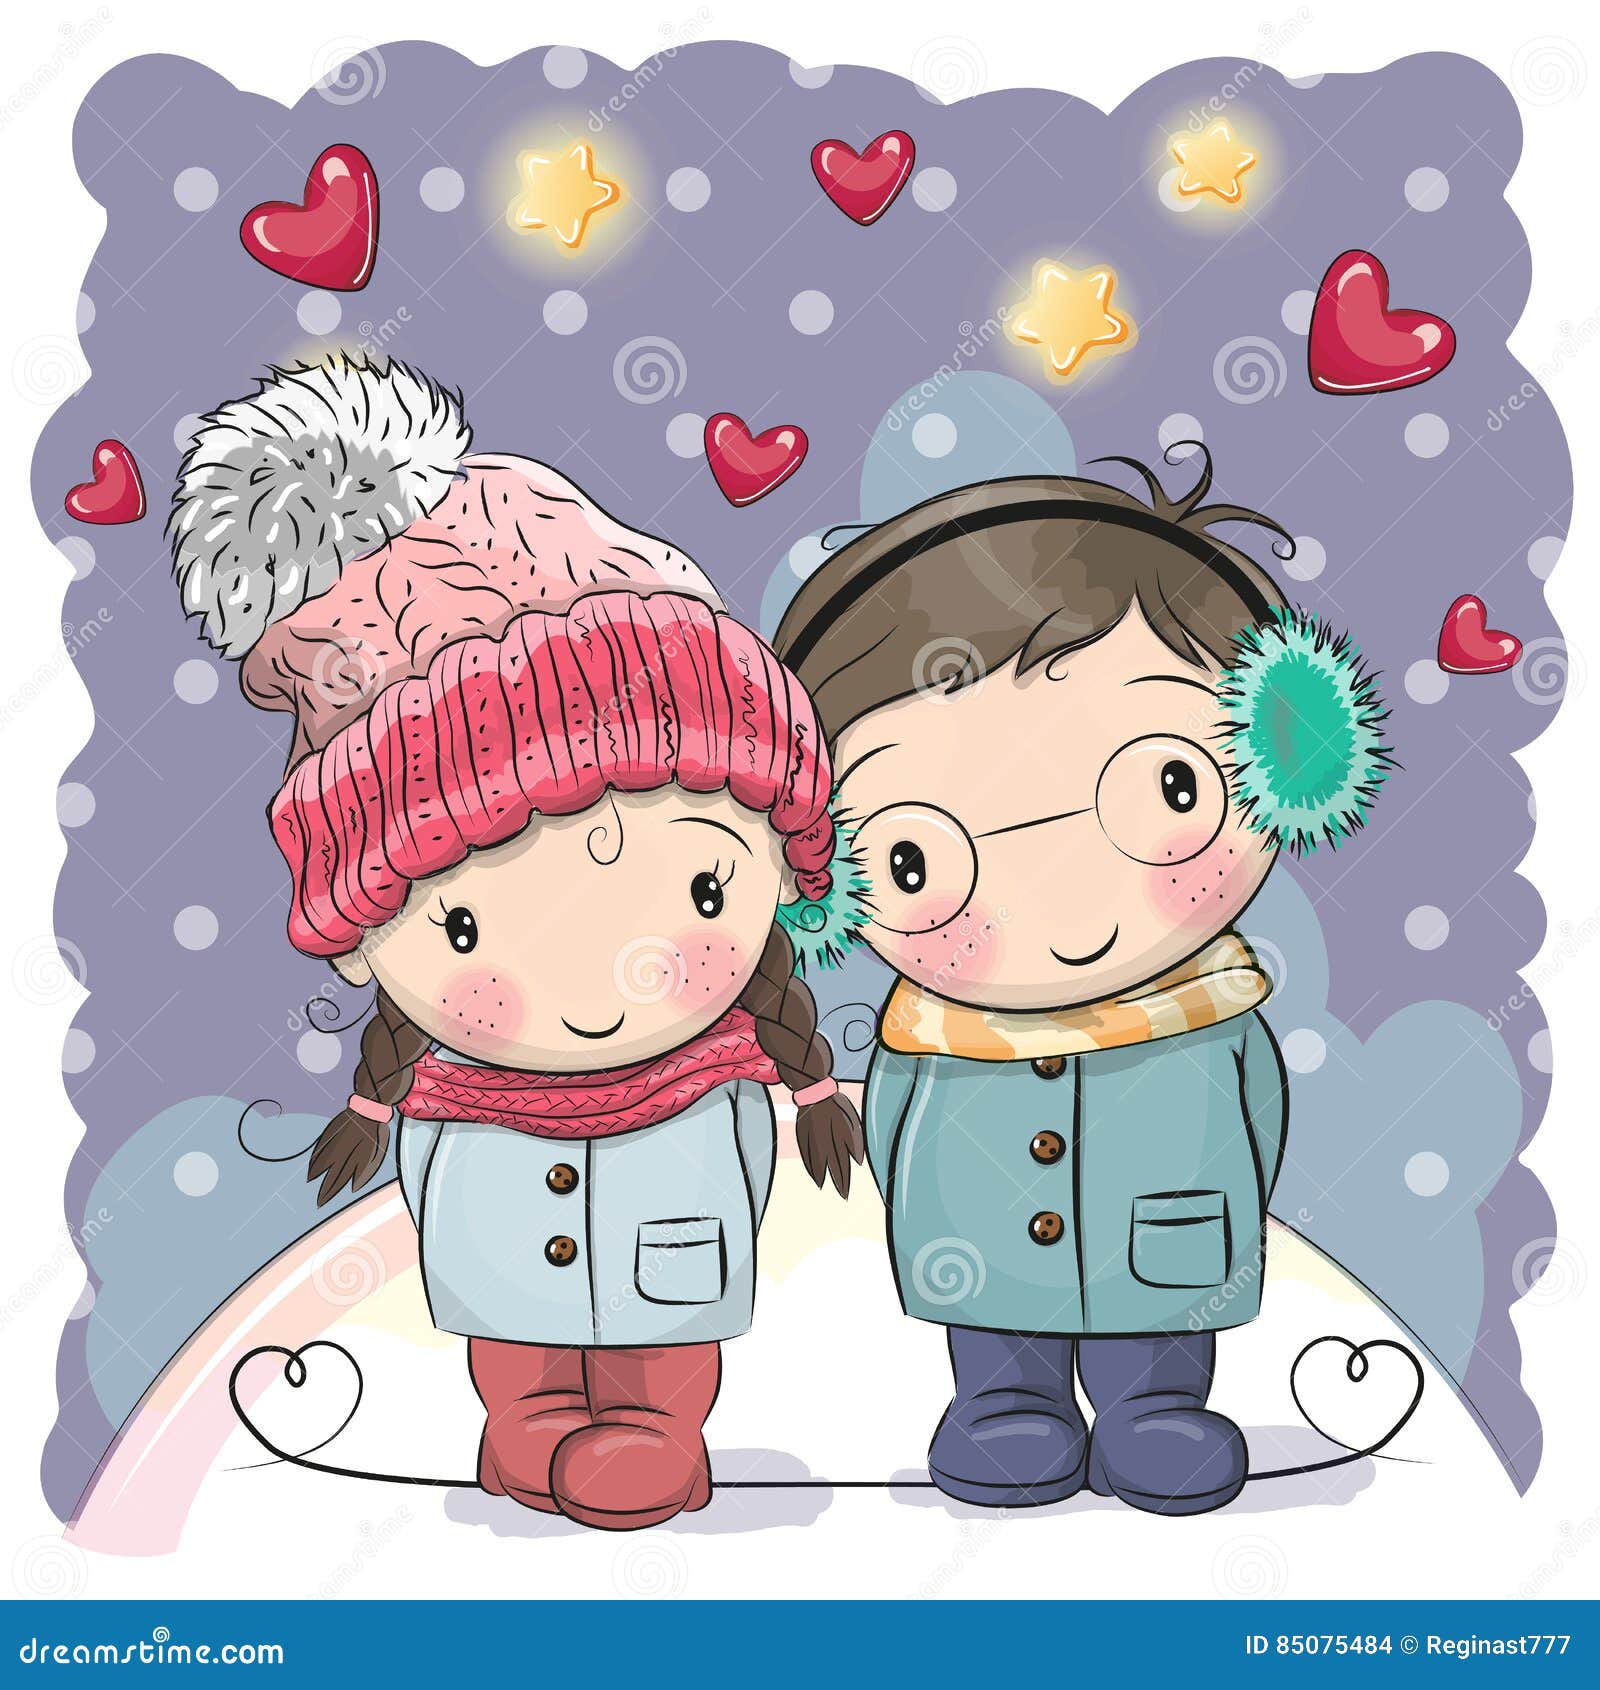 Cute winter illustration stock vector. Illustration of greeting - 85075484